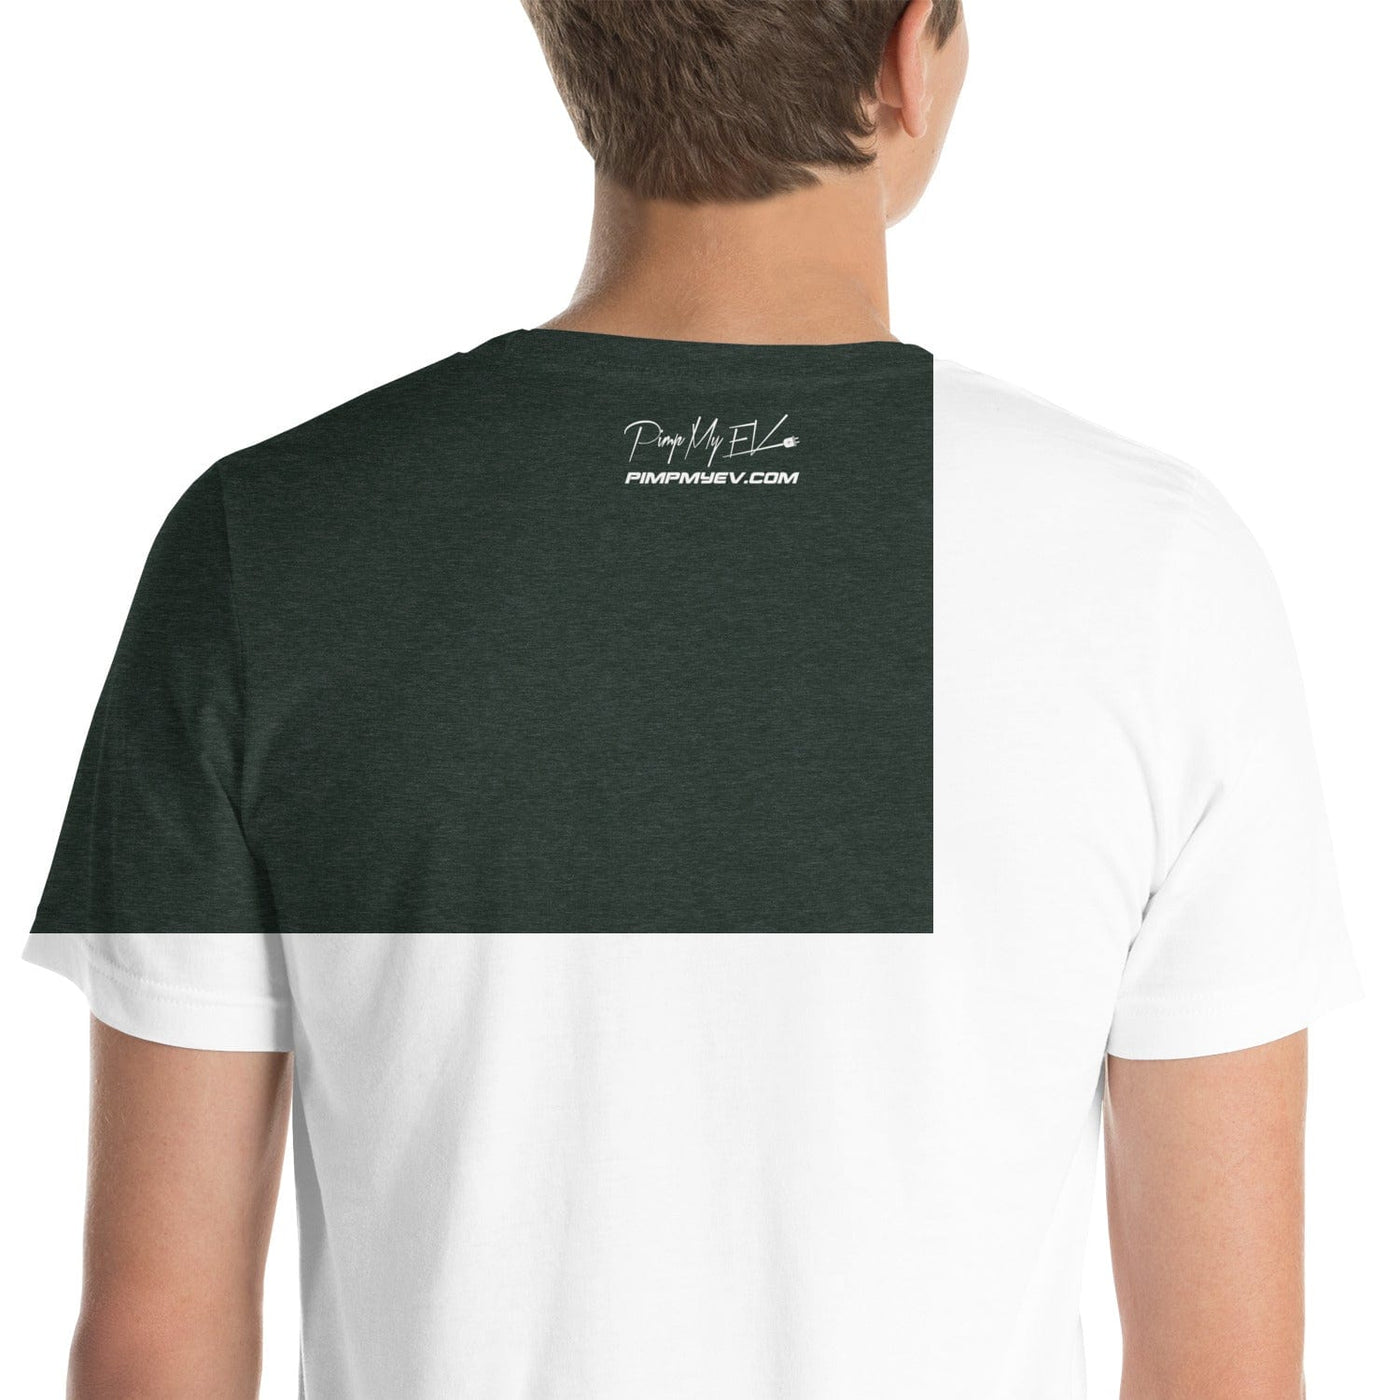 T35L4 Bold Short Sleeve Unisex t-shirt For Tesla Enthusiasts - PimpMyEV